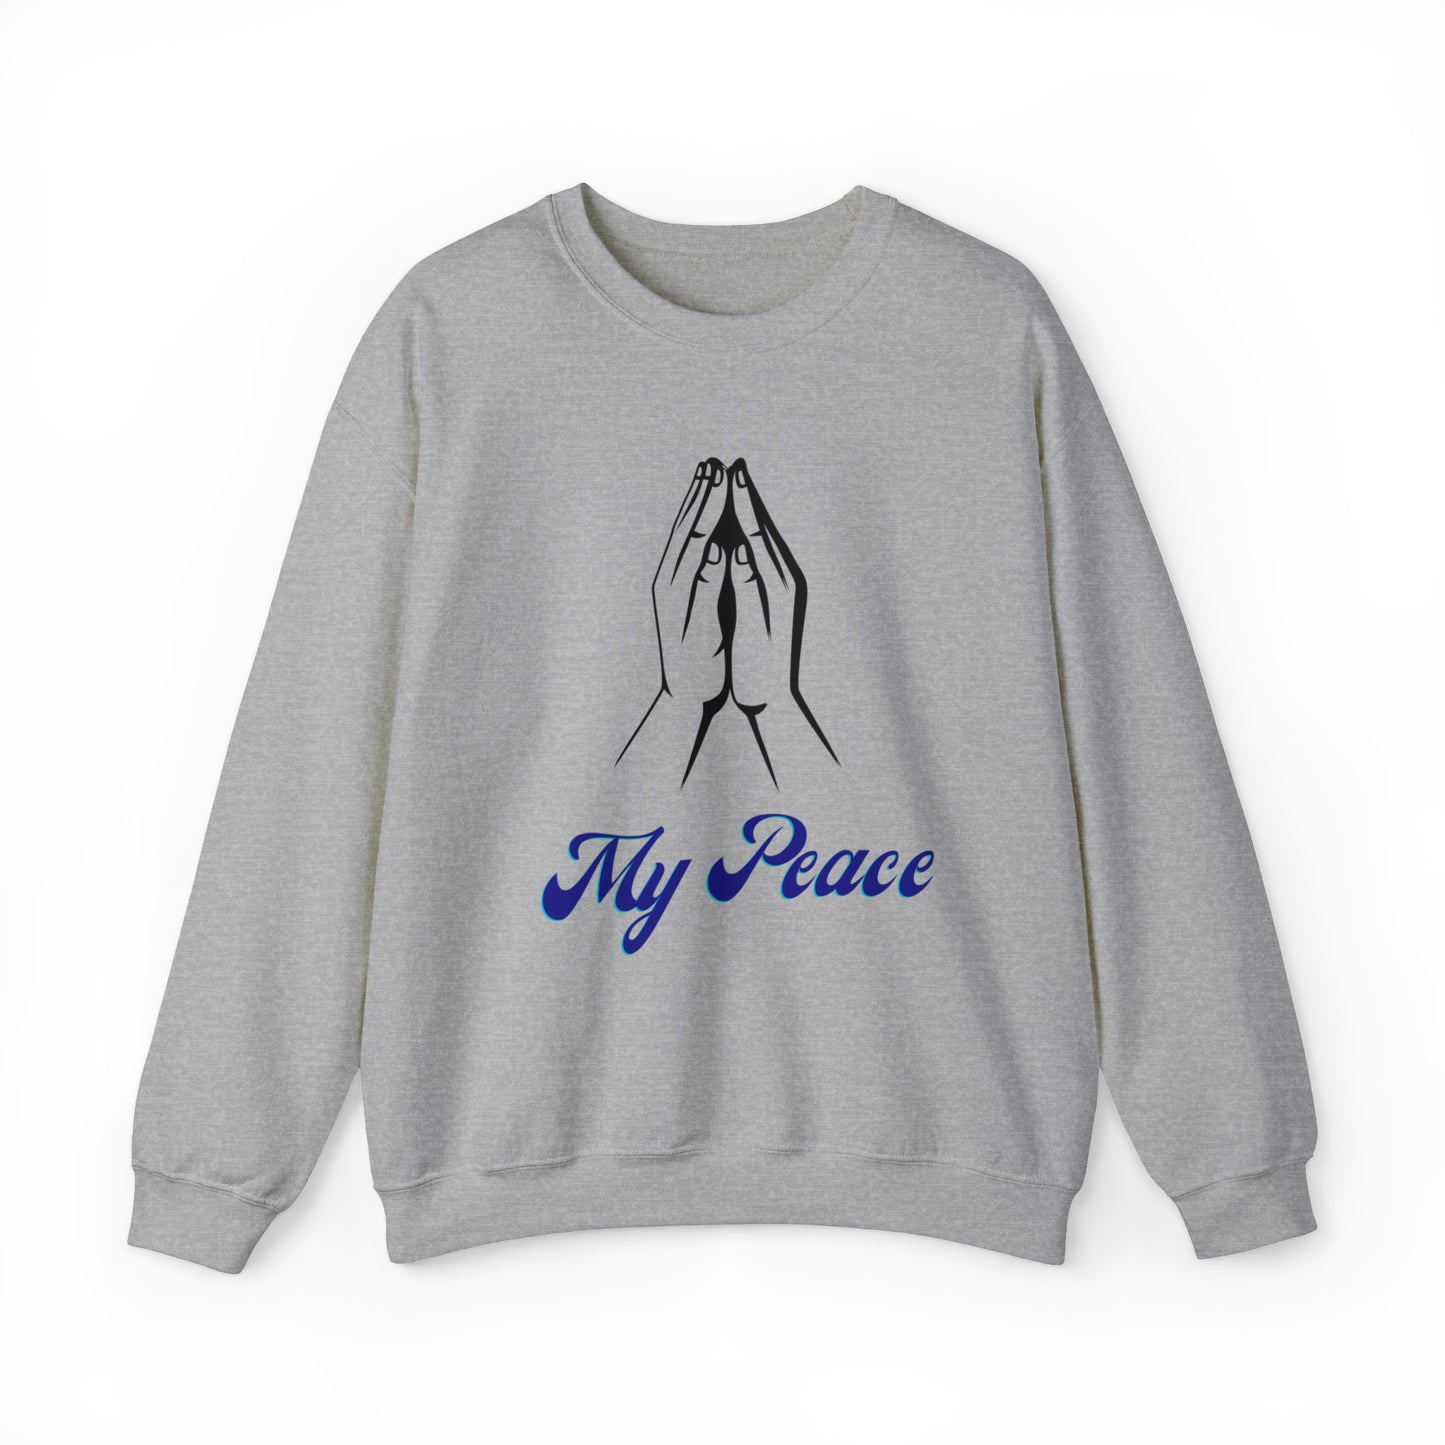 Praying Hands crewneck sweatshirt gift